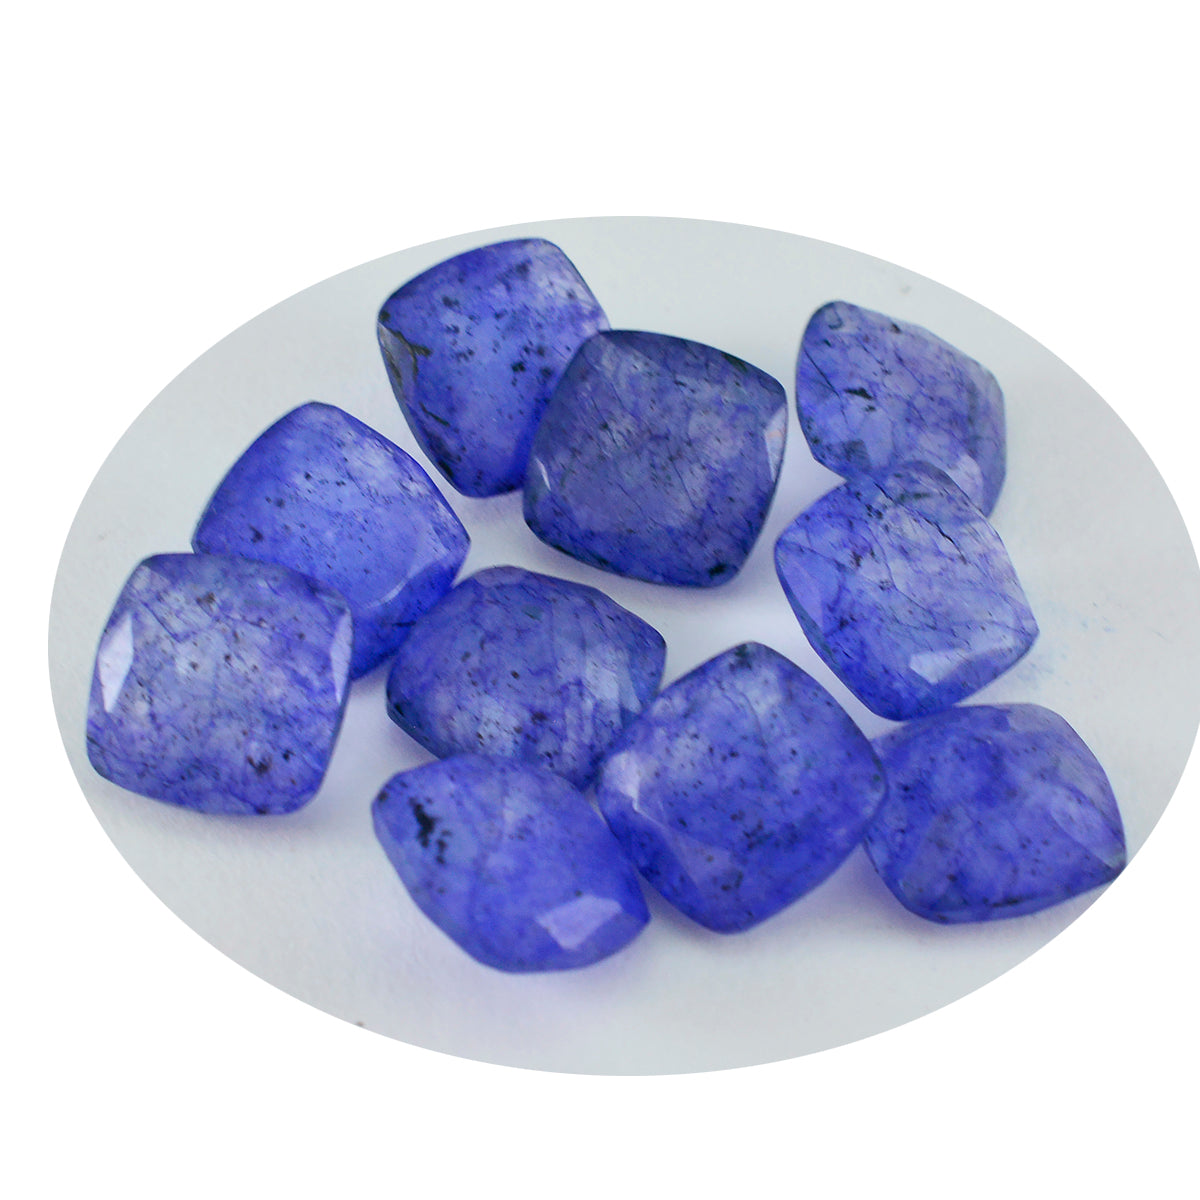 riyogems 1pc リアル ブルー ジャスパー ファセット 5x5 mm クッション形状のかわいい品質の石